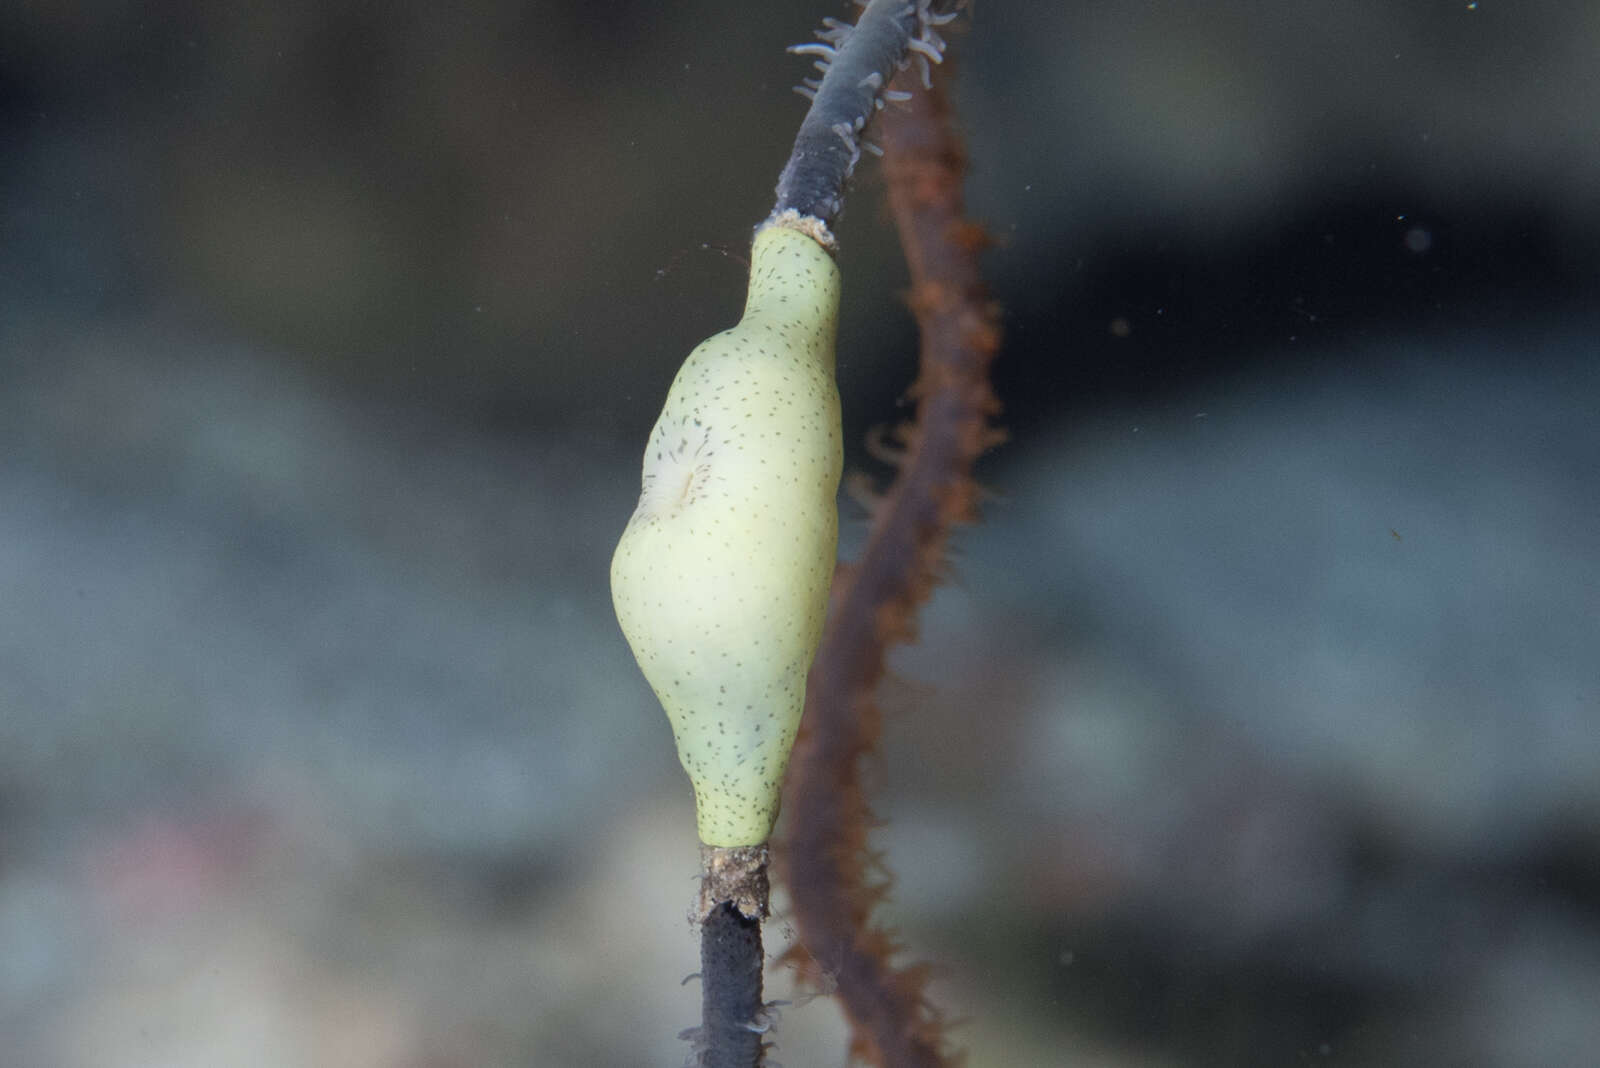 Image of jewel anemone